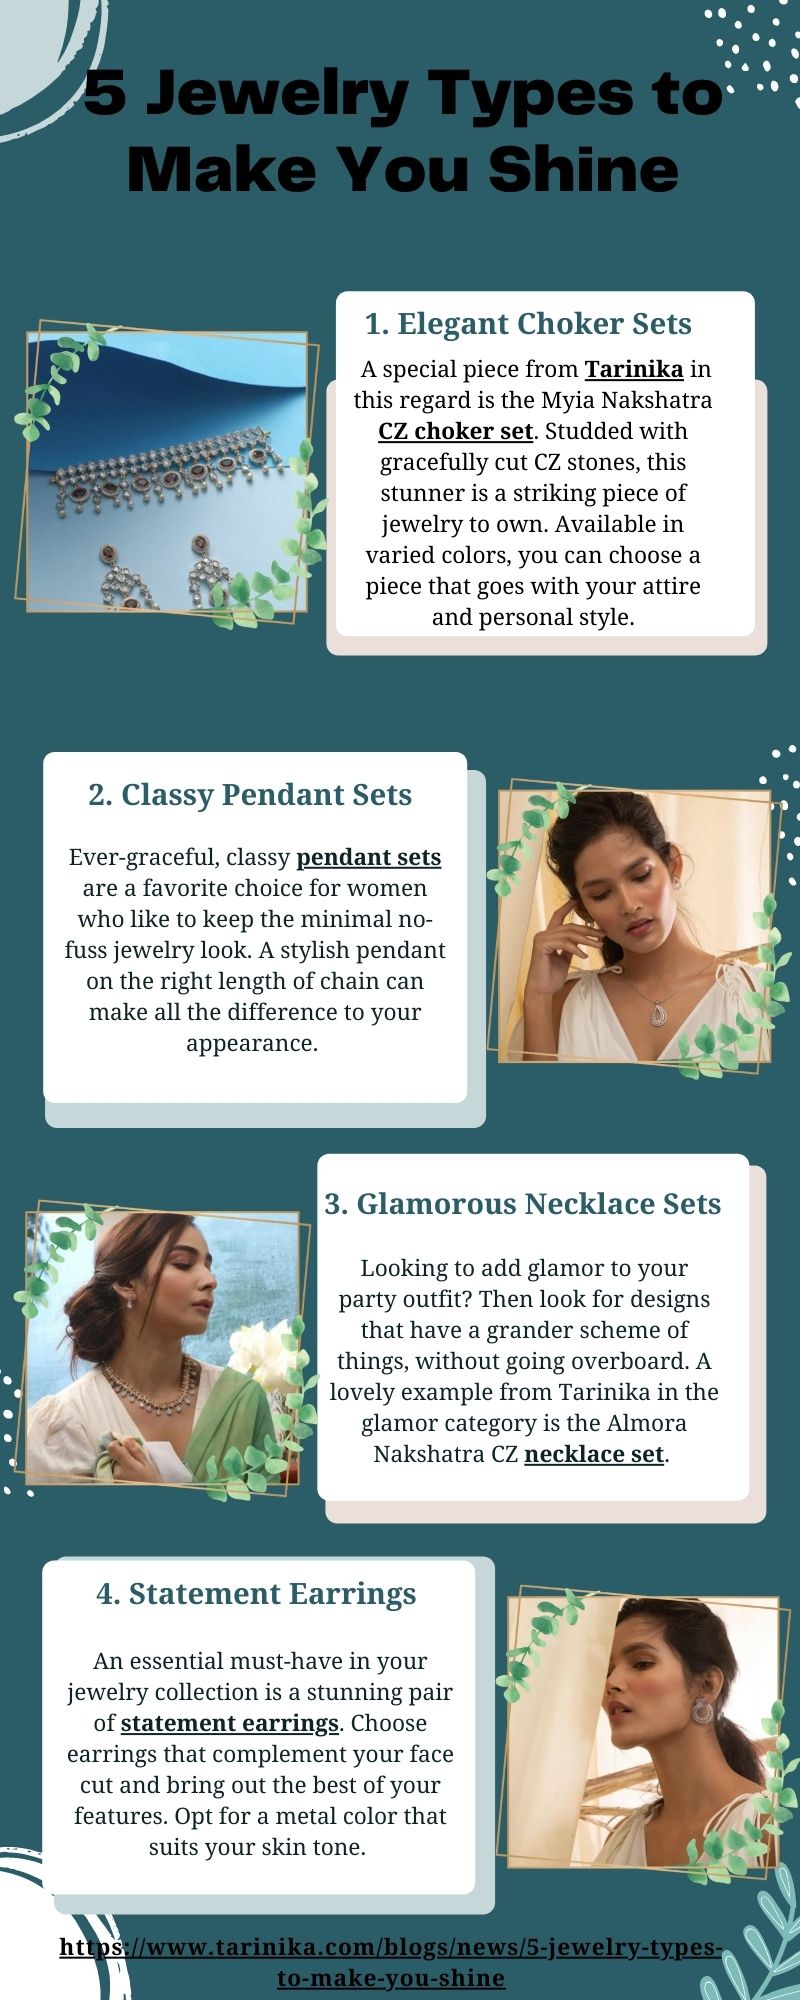 5 Jewelry Types to Make You Shine